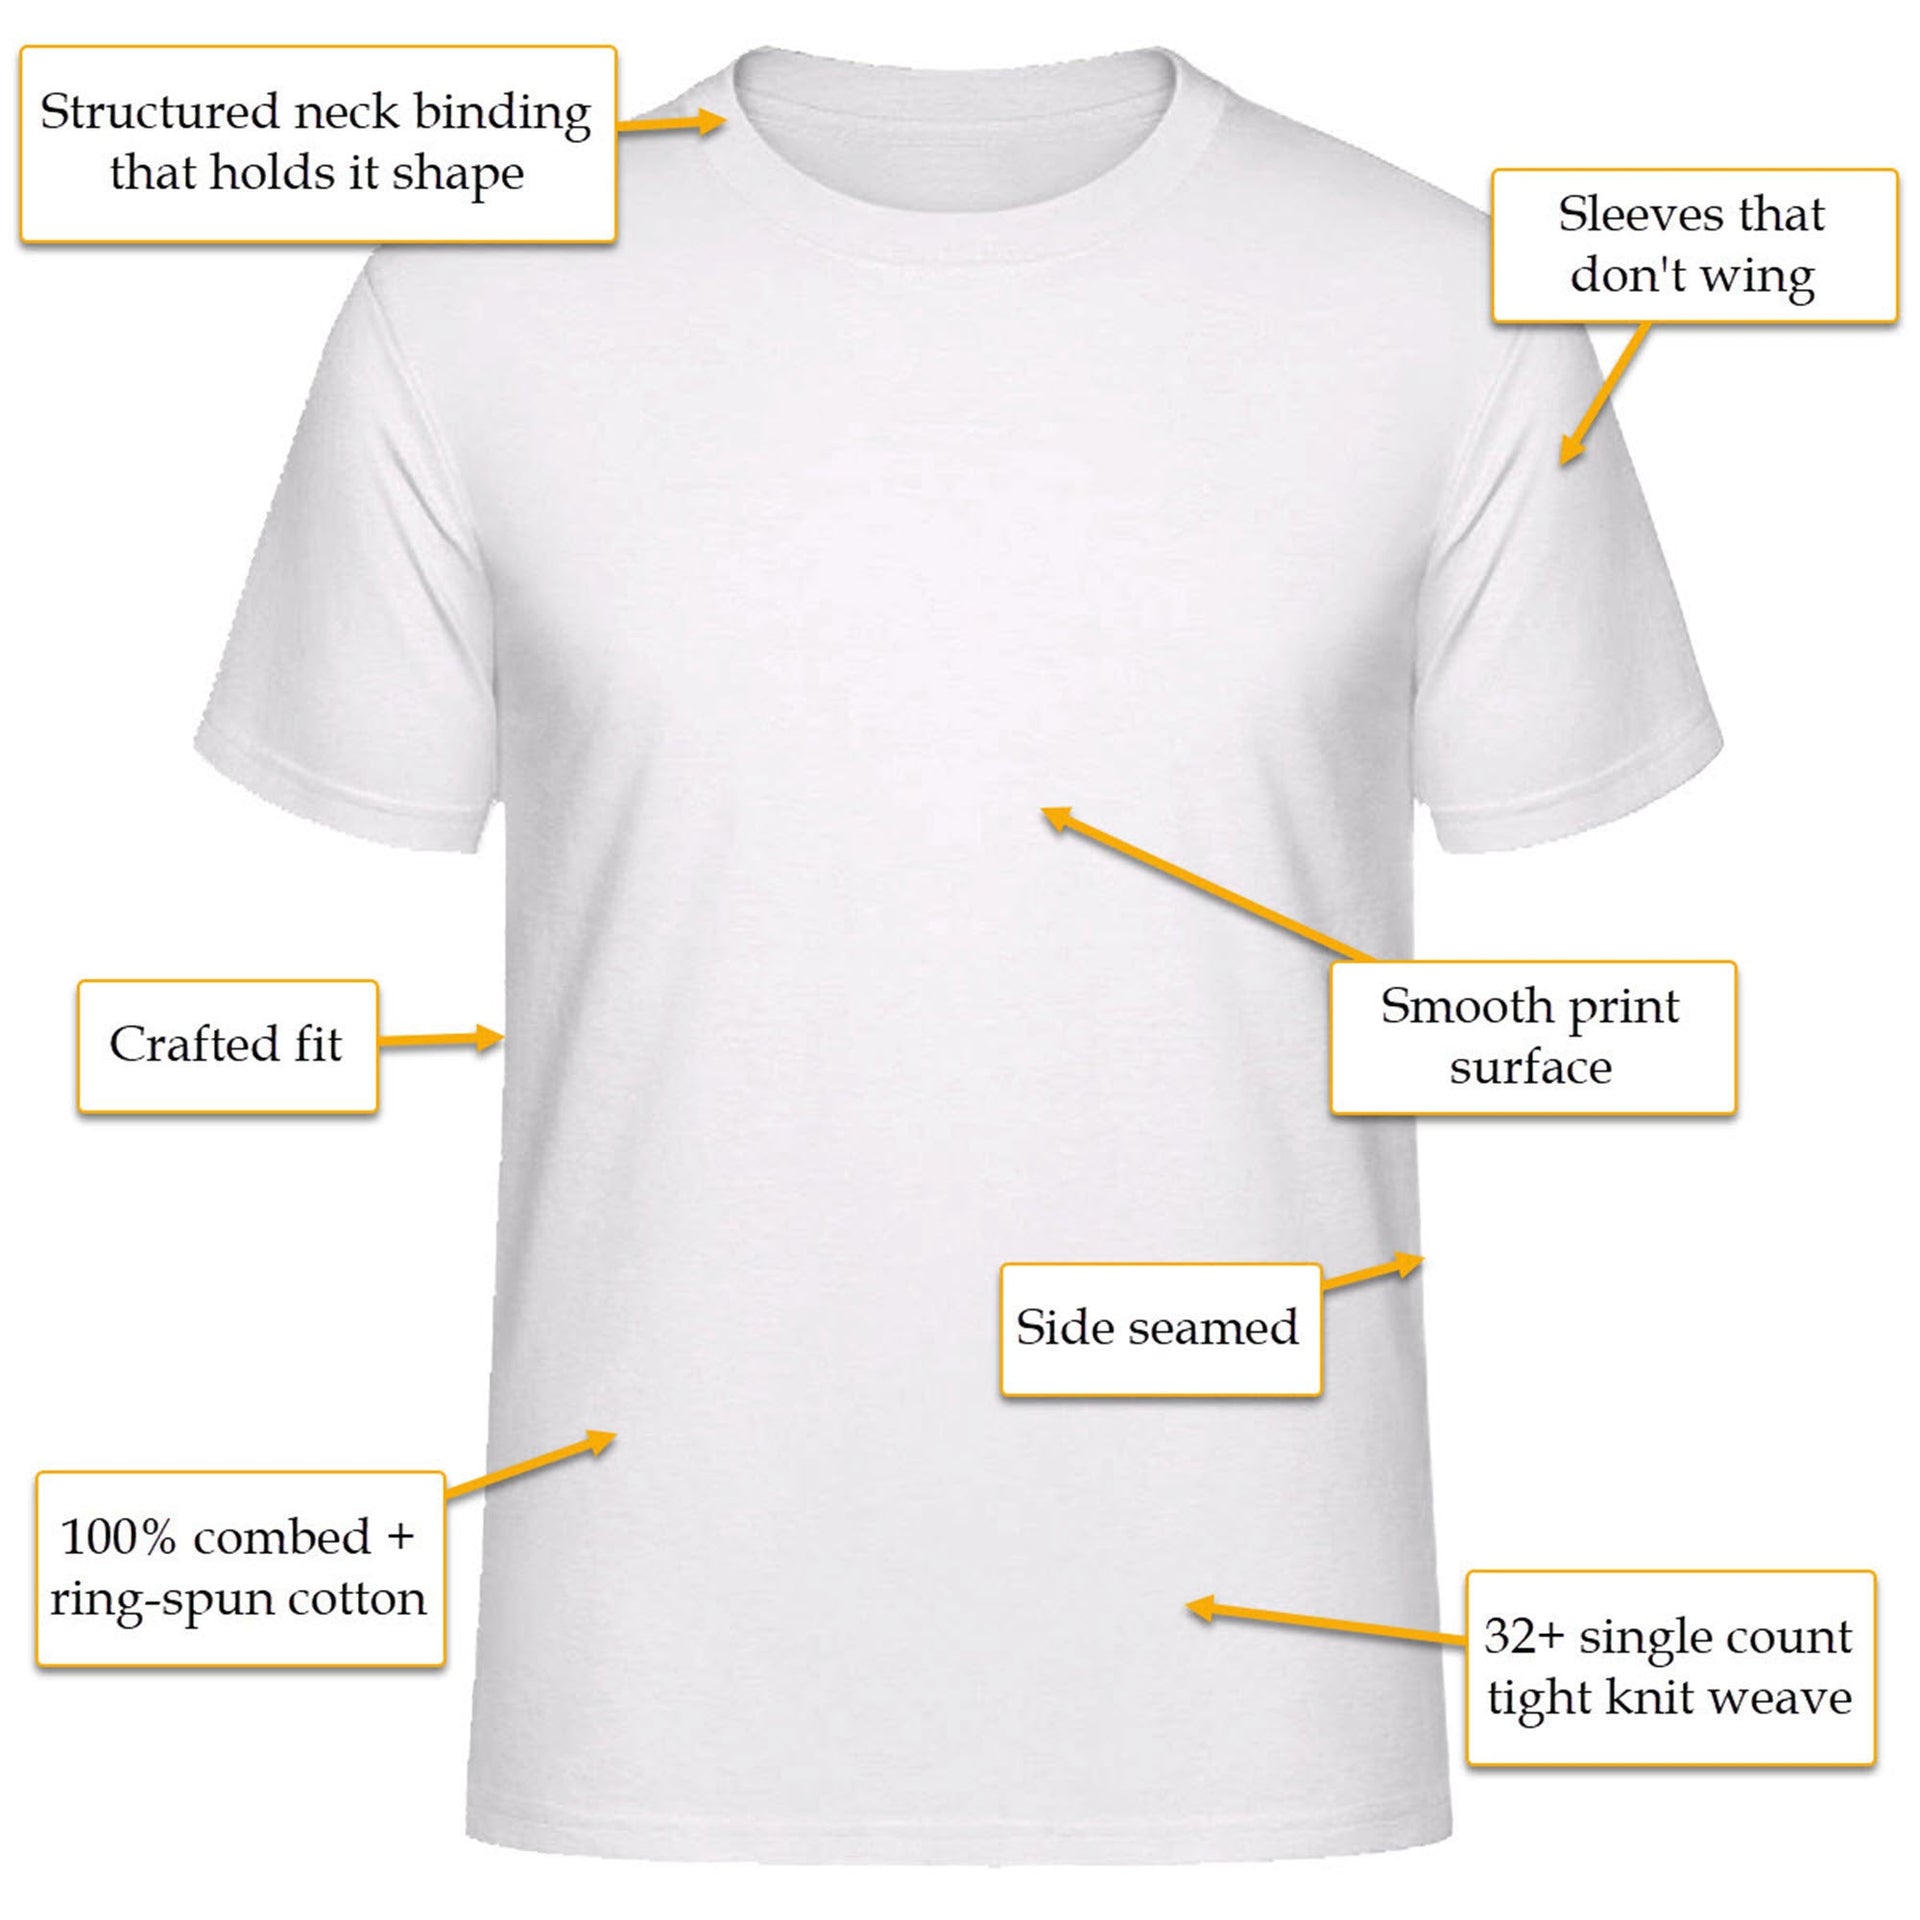 Keith Richards Ink Drawing T-shirt - Clothing - Harvey Ltd